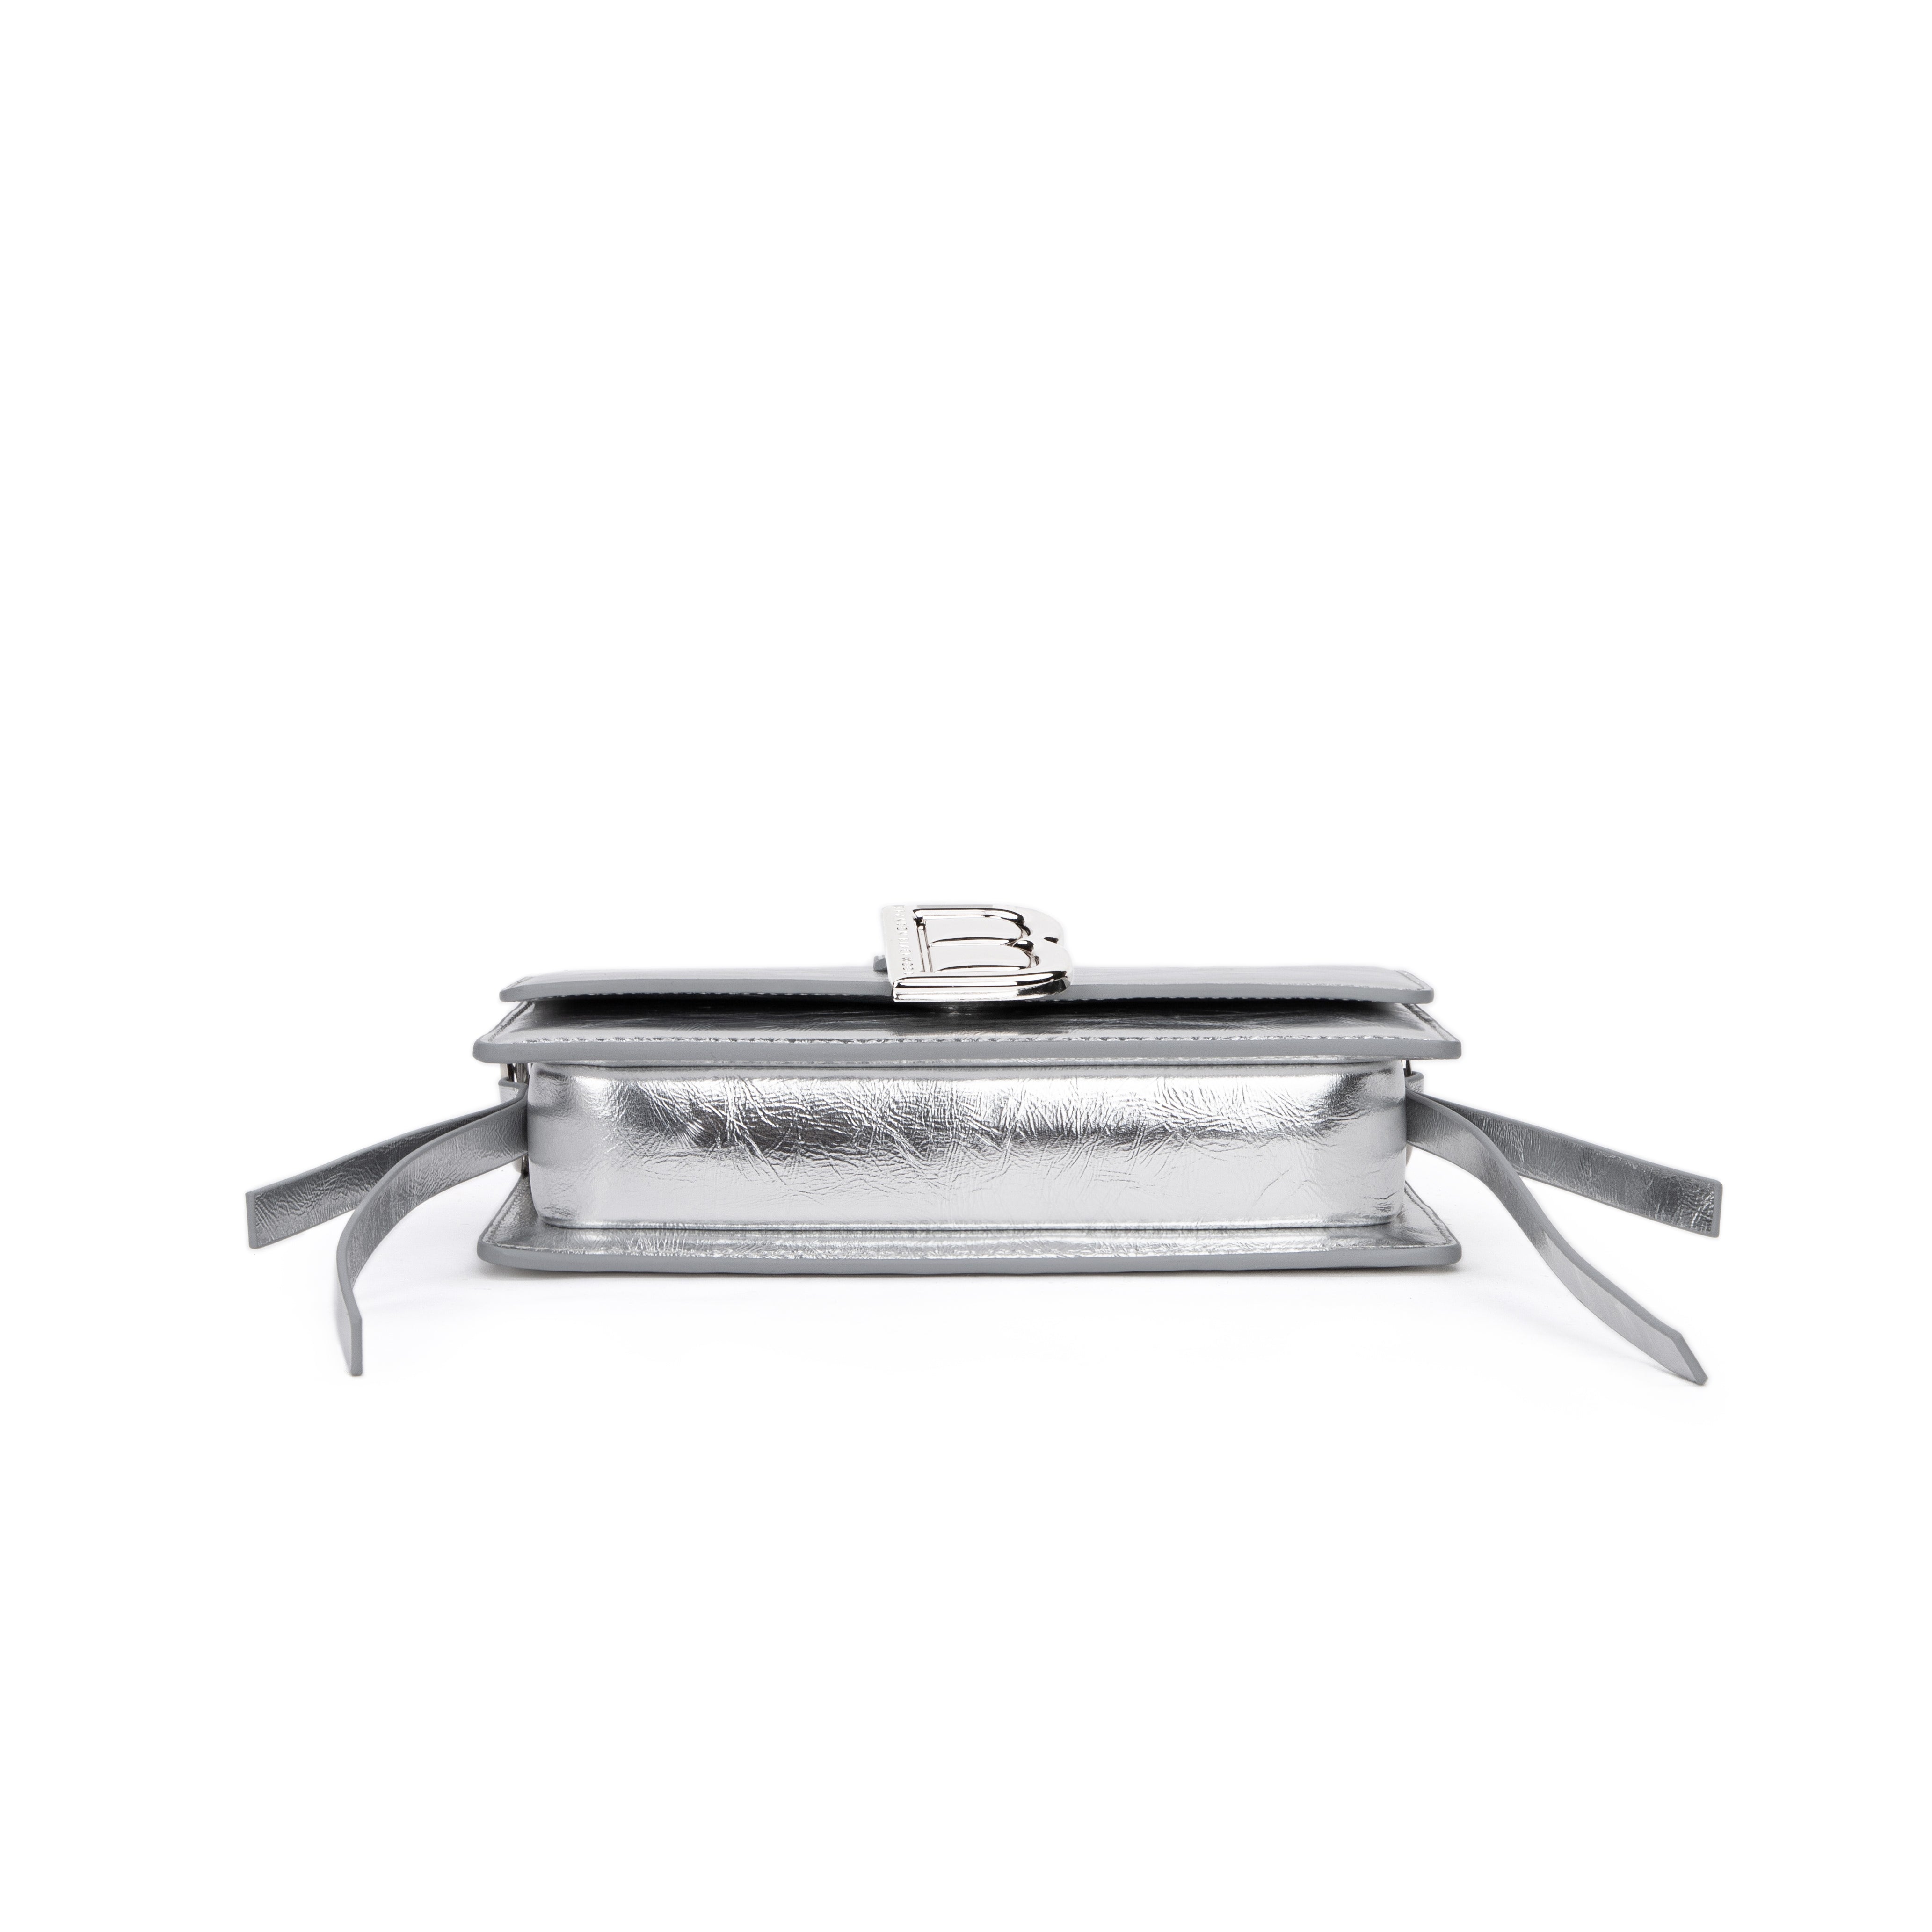 Silver Cracked Leather Nia Bag | Luxury Designer Bags | Brandon Blackwood